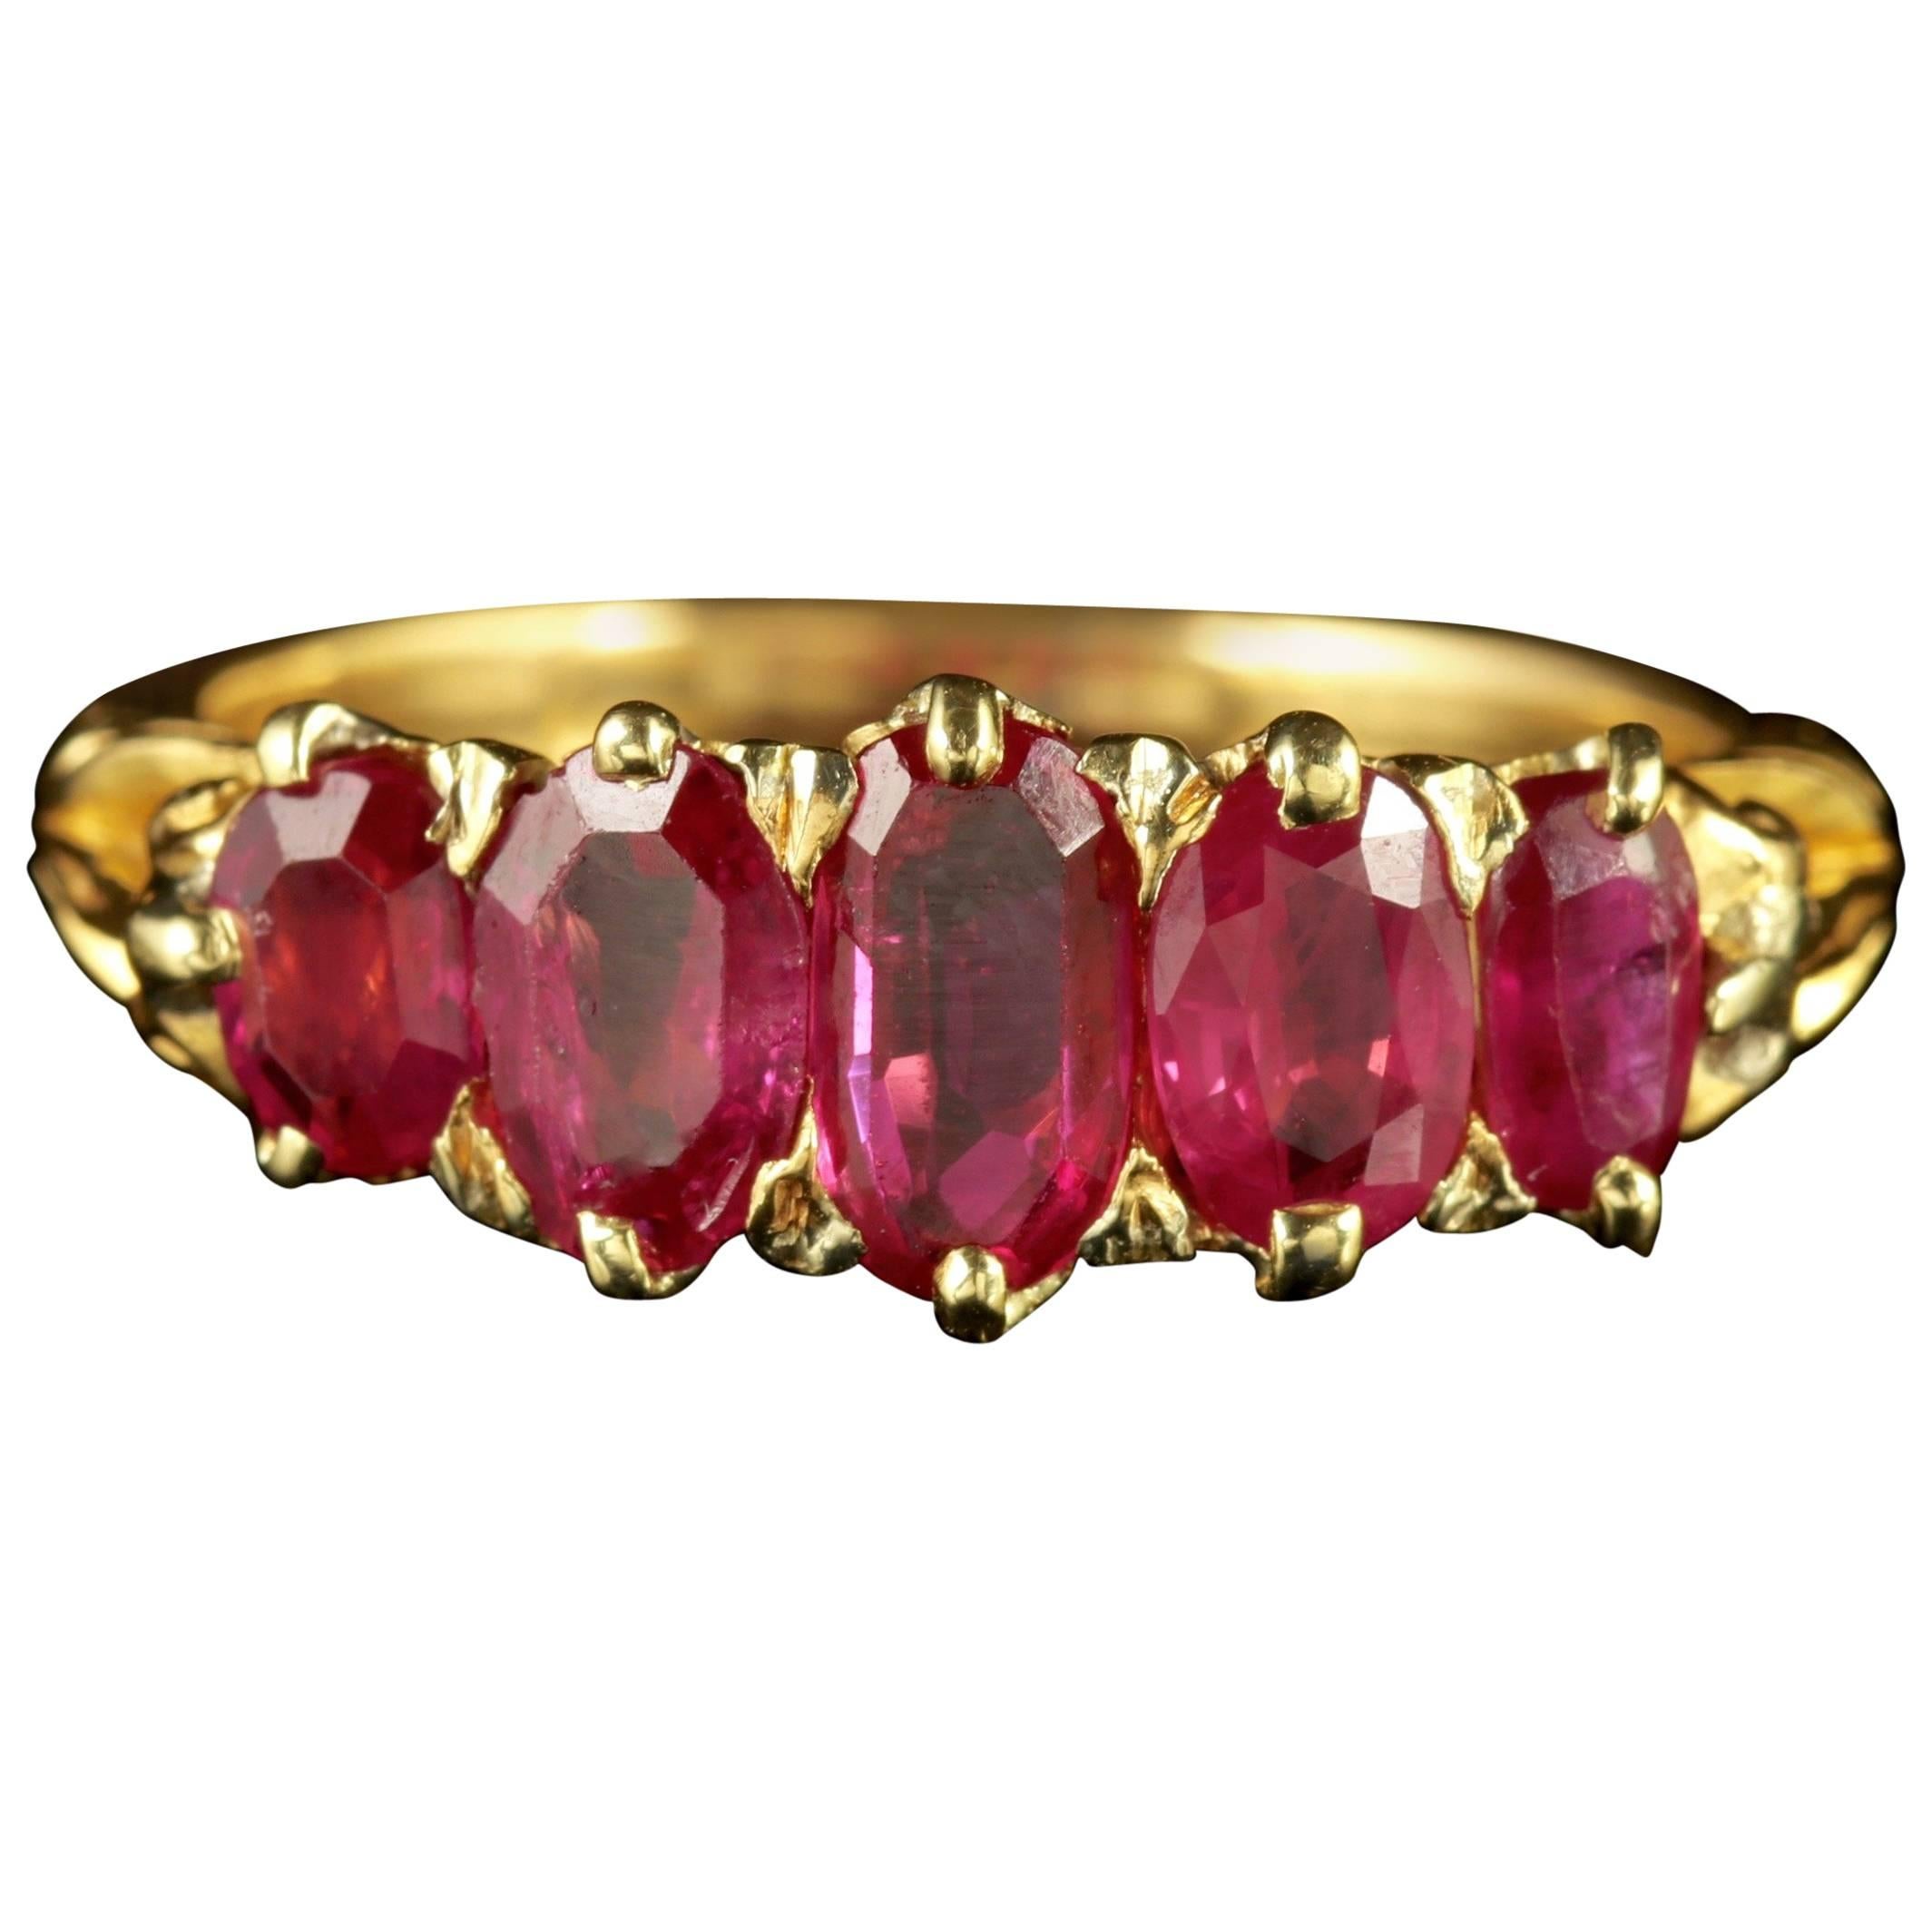 Antique Victorian Natural Burmese Ruby Ring 18 Carat Gold, circa 1900 Certified